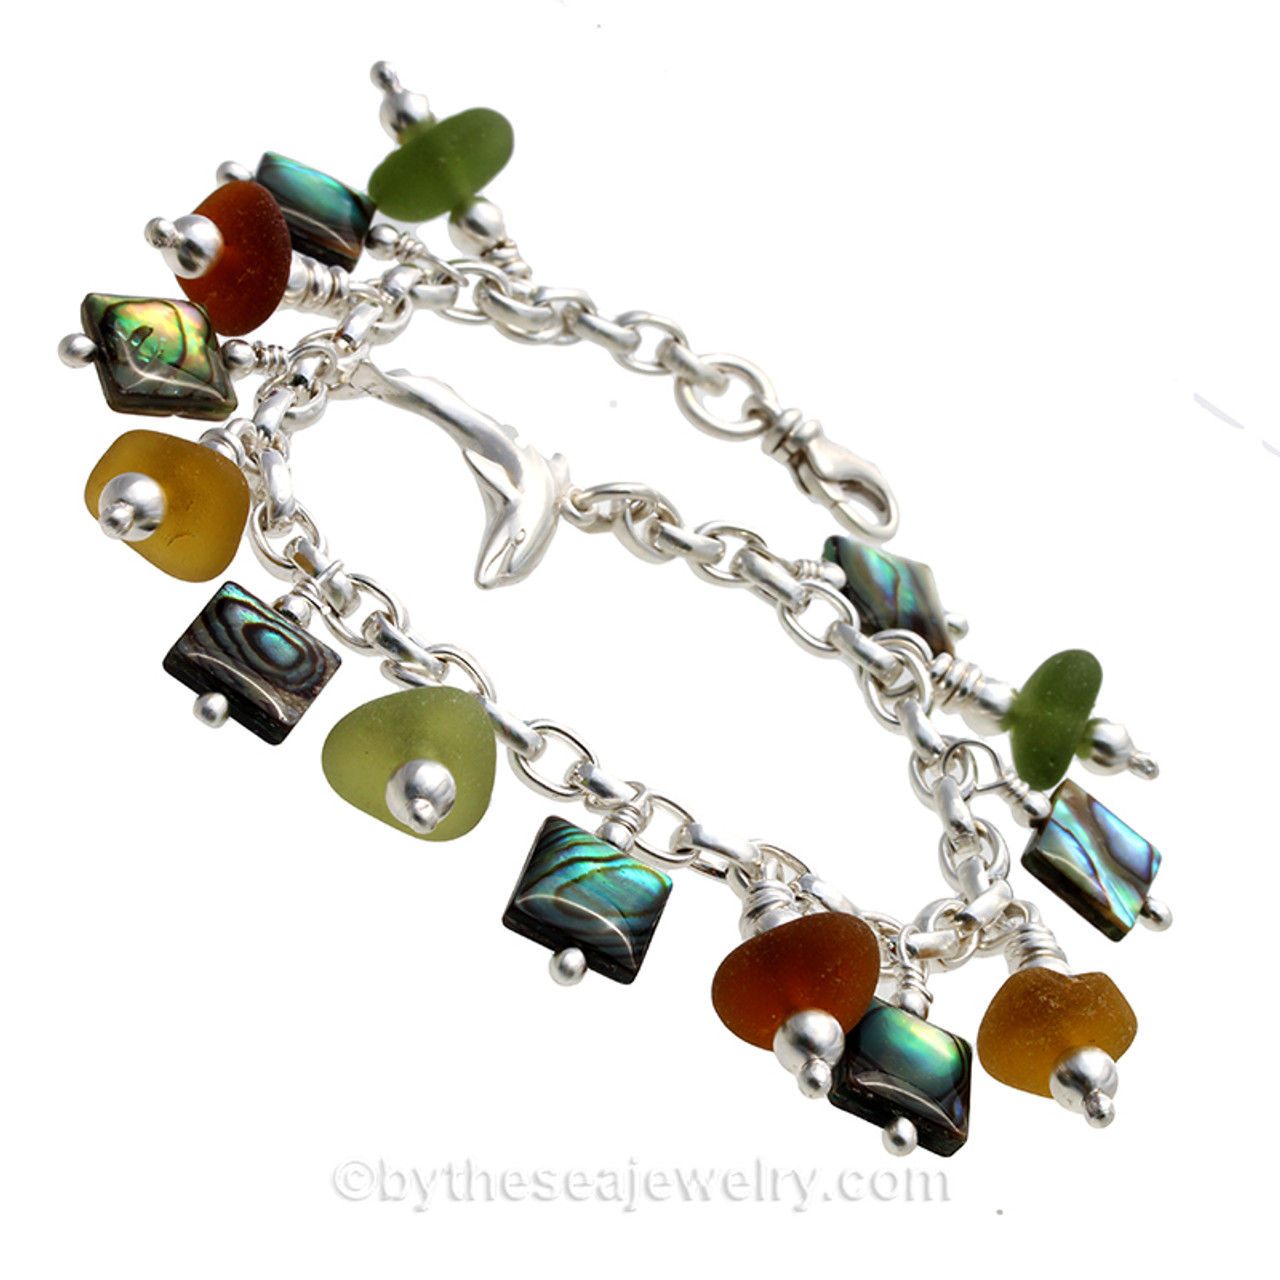 Vintage Ocean Themed Charm Bracelet